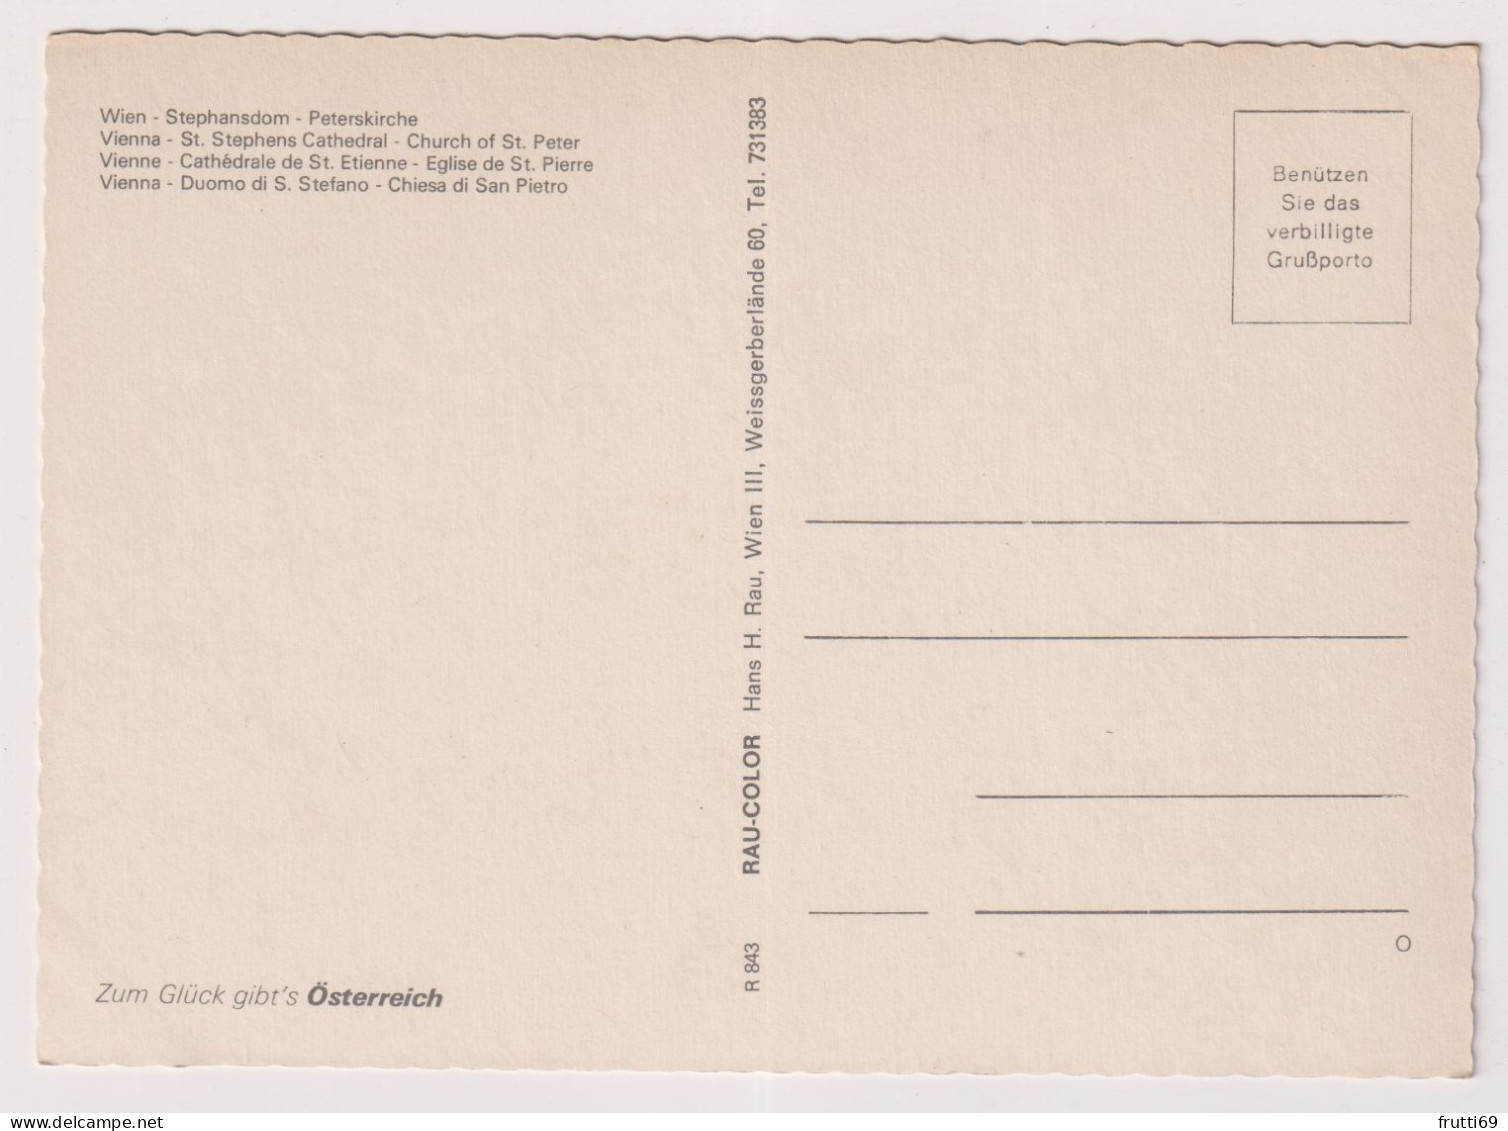 AK 198905 AUSTRIA - Wien - Stephansdom - Peterskirche - Kirchen